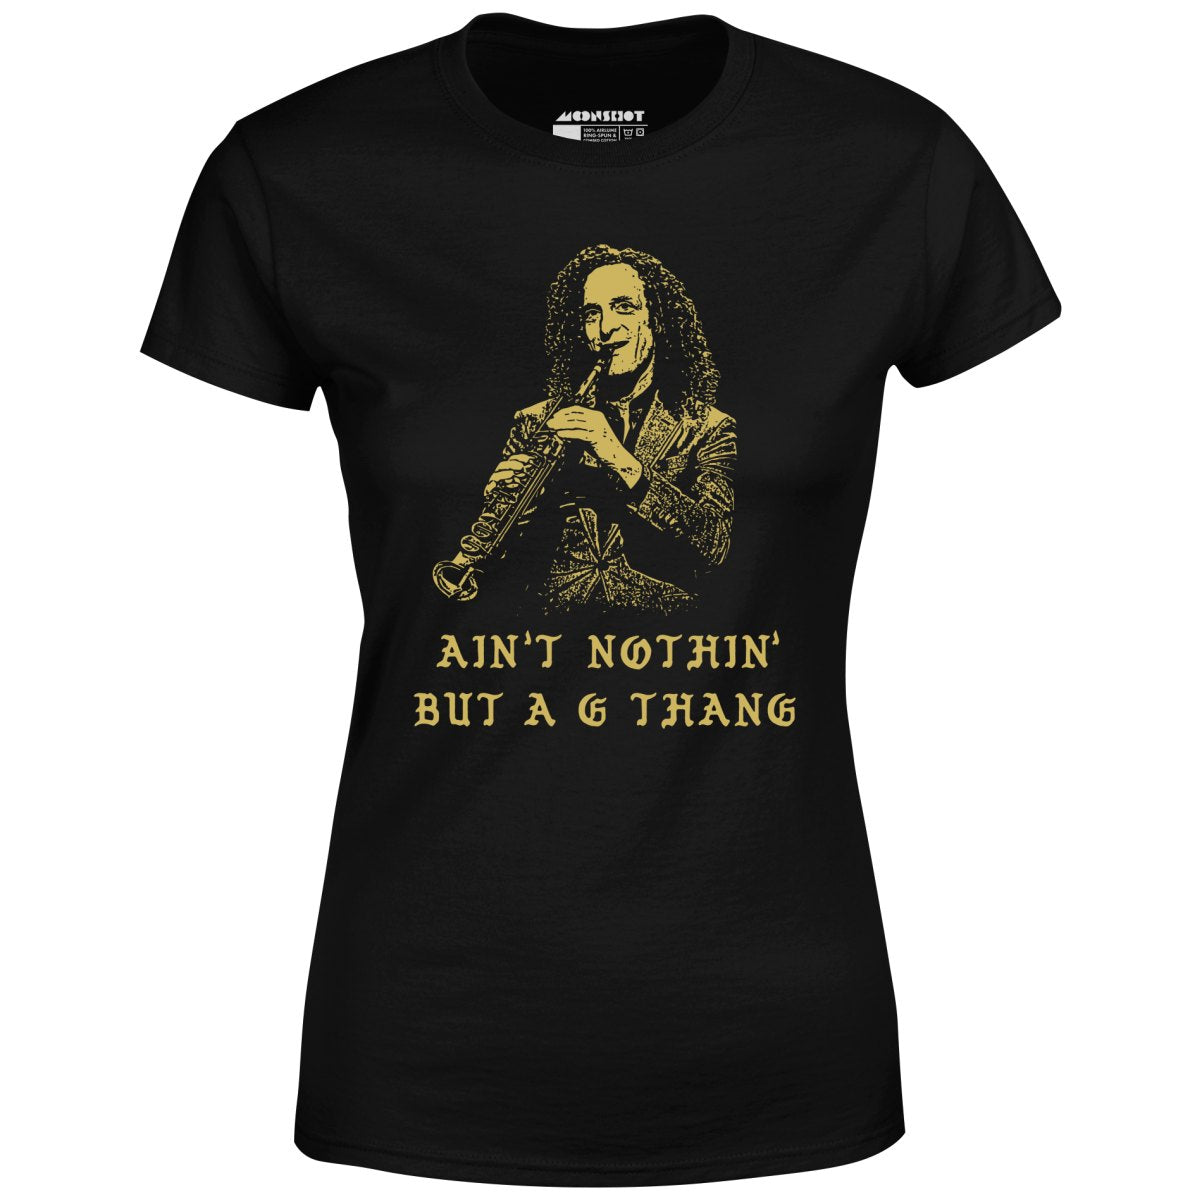 Ain't Nothin' But a G Thang - Women's T-Shirt